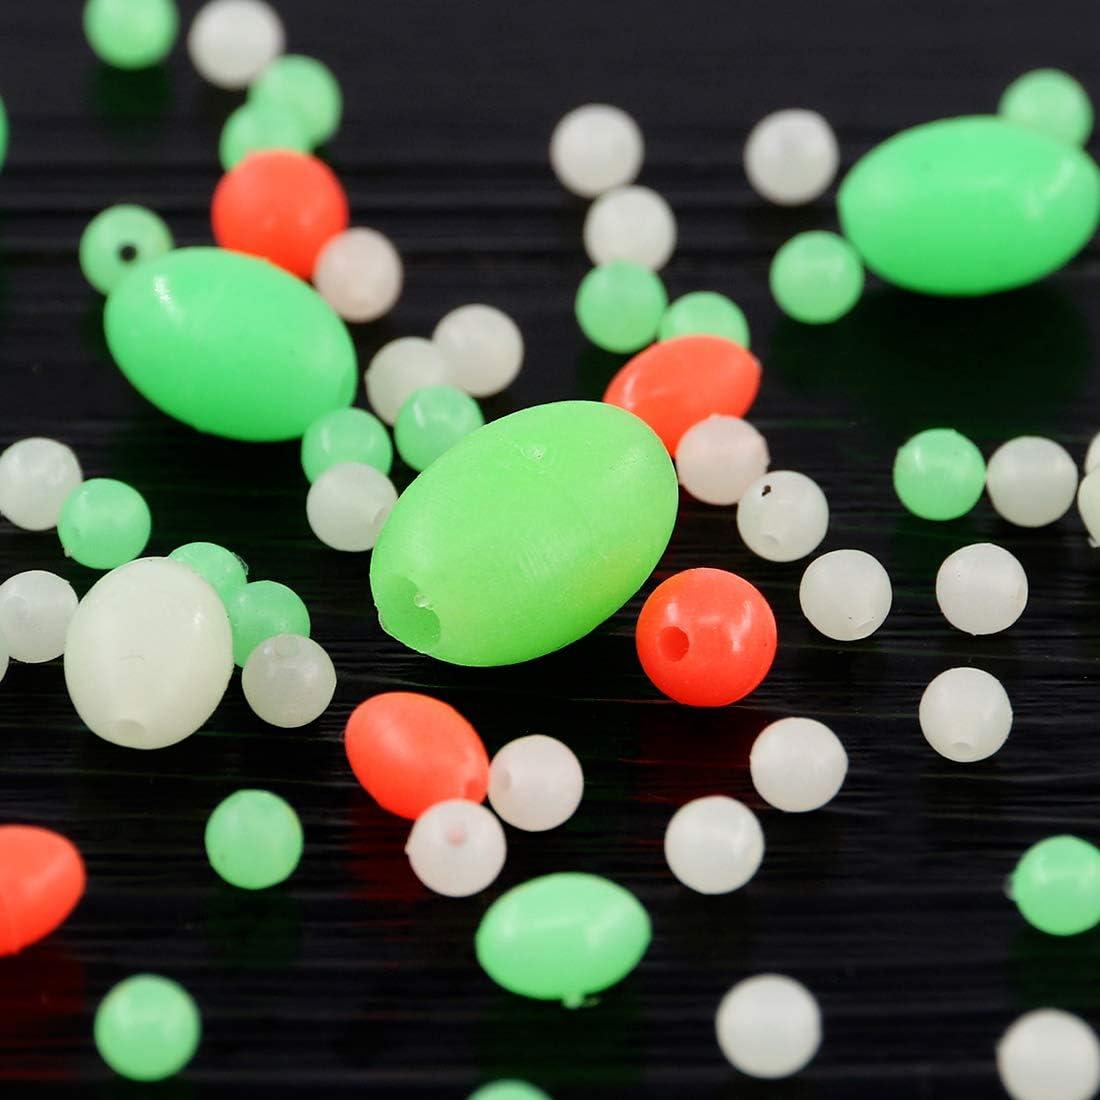 Swpeet 1050Pcs Plastic Oval Shaped Luminous Fishing Beads